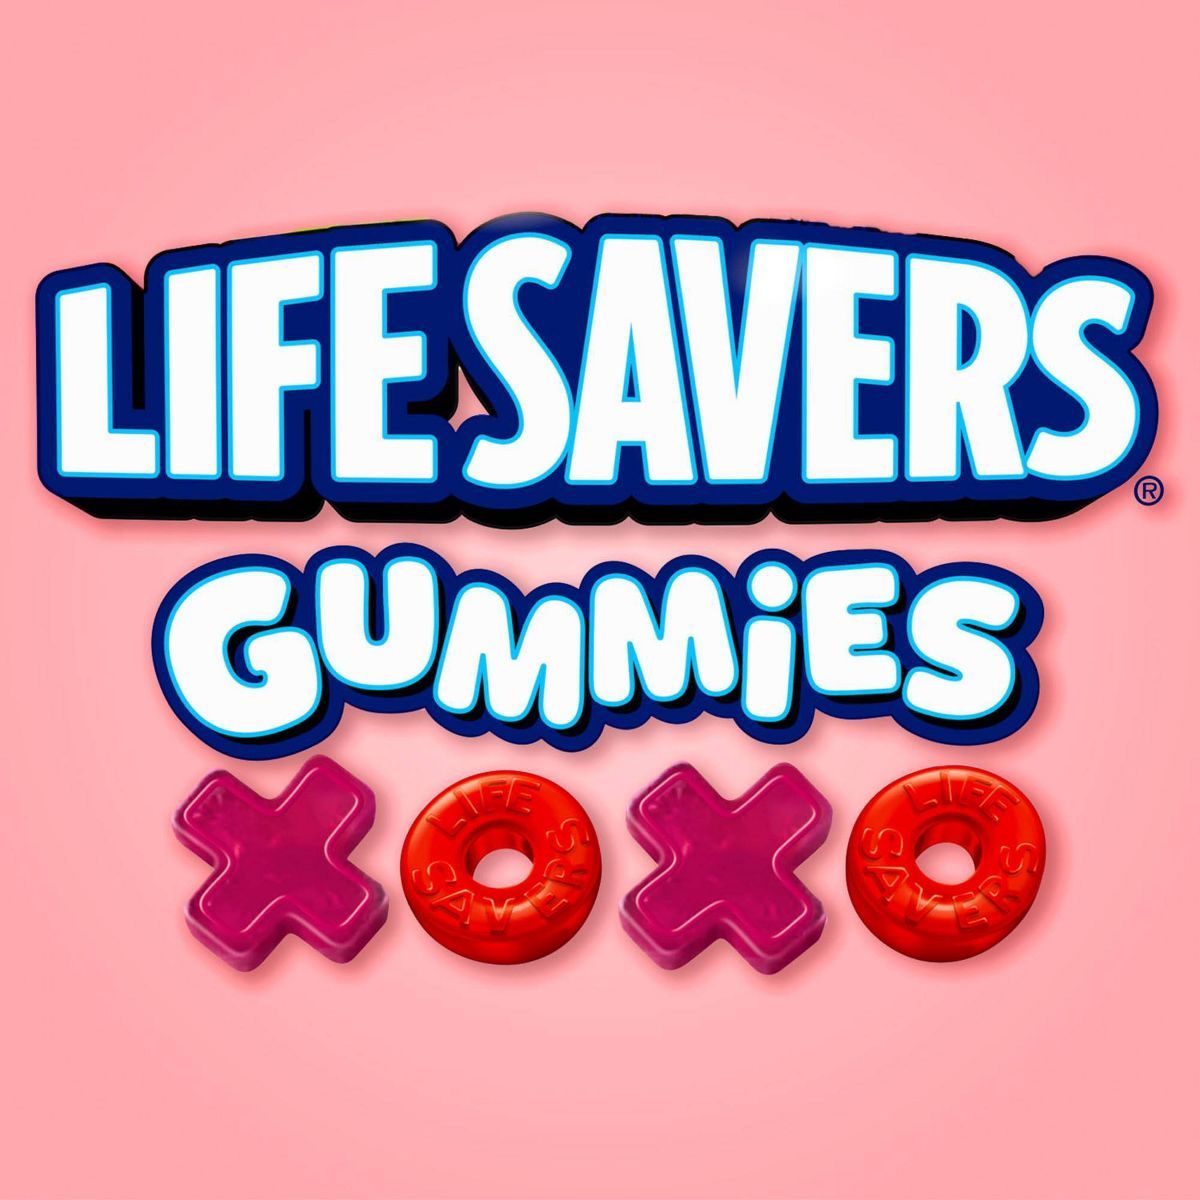 Life Savers Gummies Valentine's Wild Berries Candy - 2oz | Target